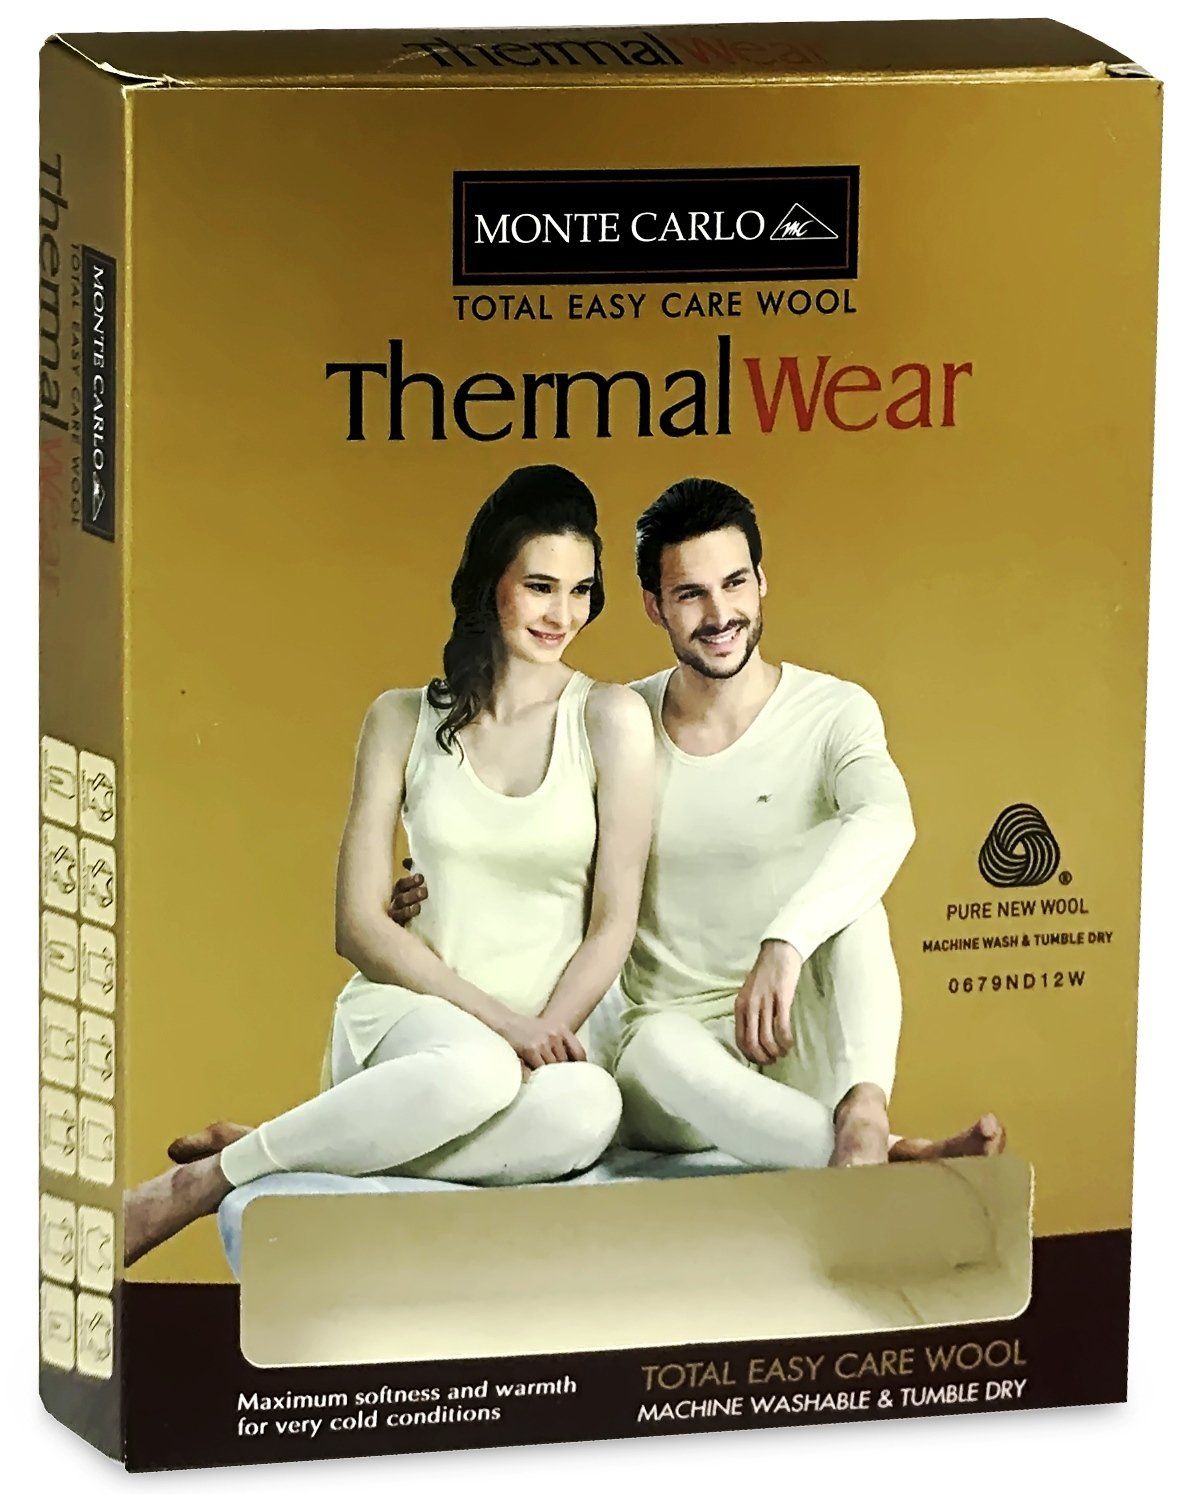 Monte Carlo Pure New Merino Wool Machine Washable Thermal for Men & Wo –